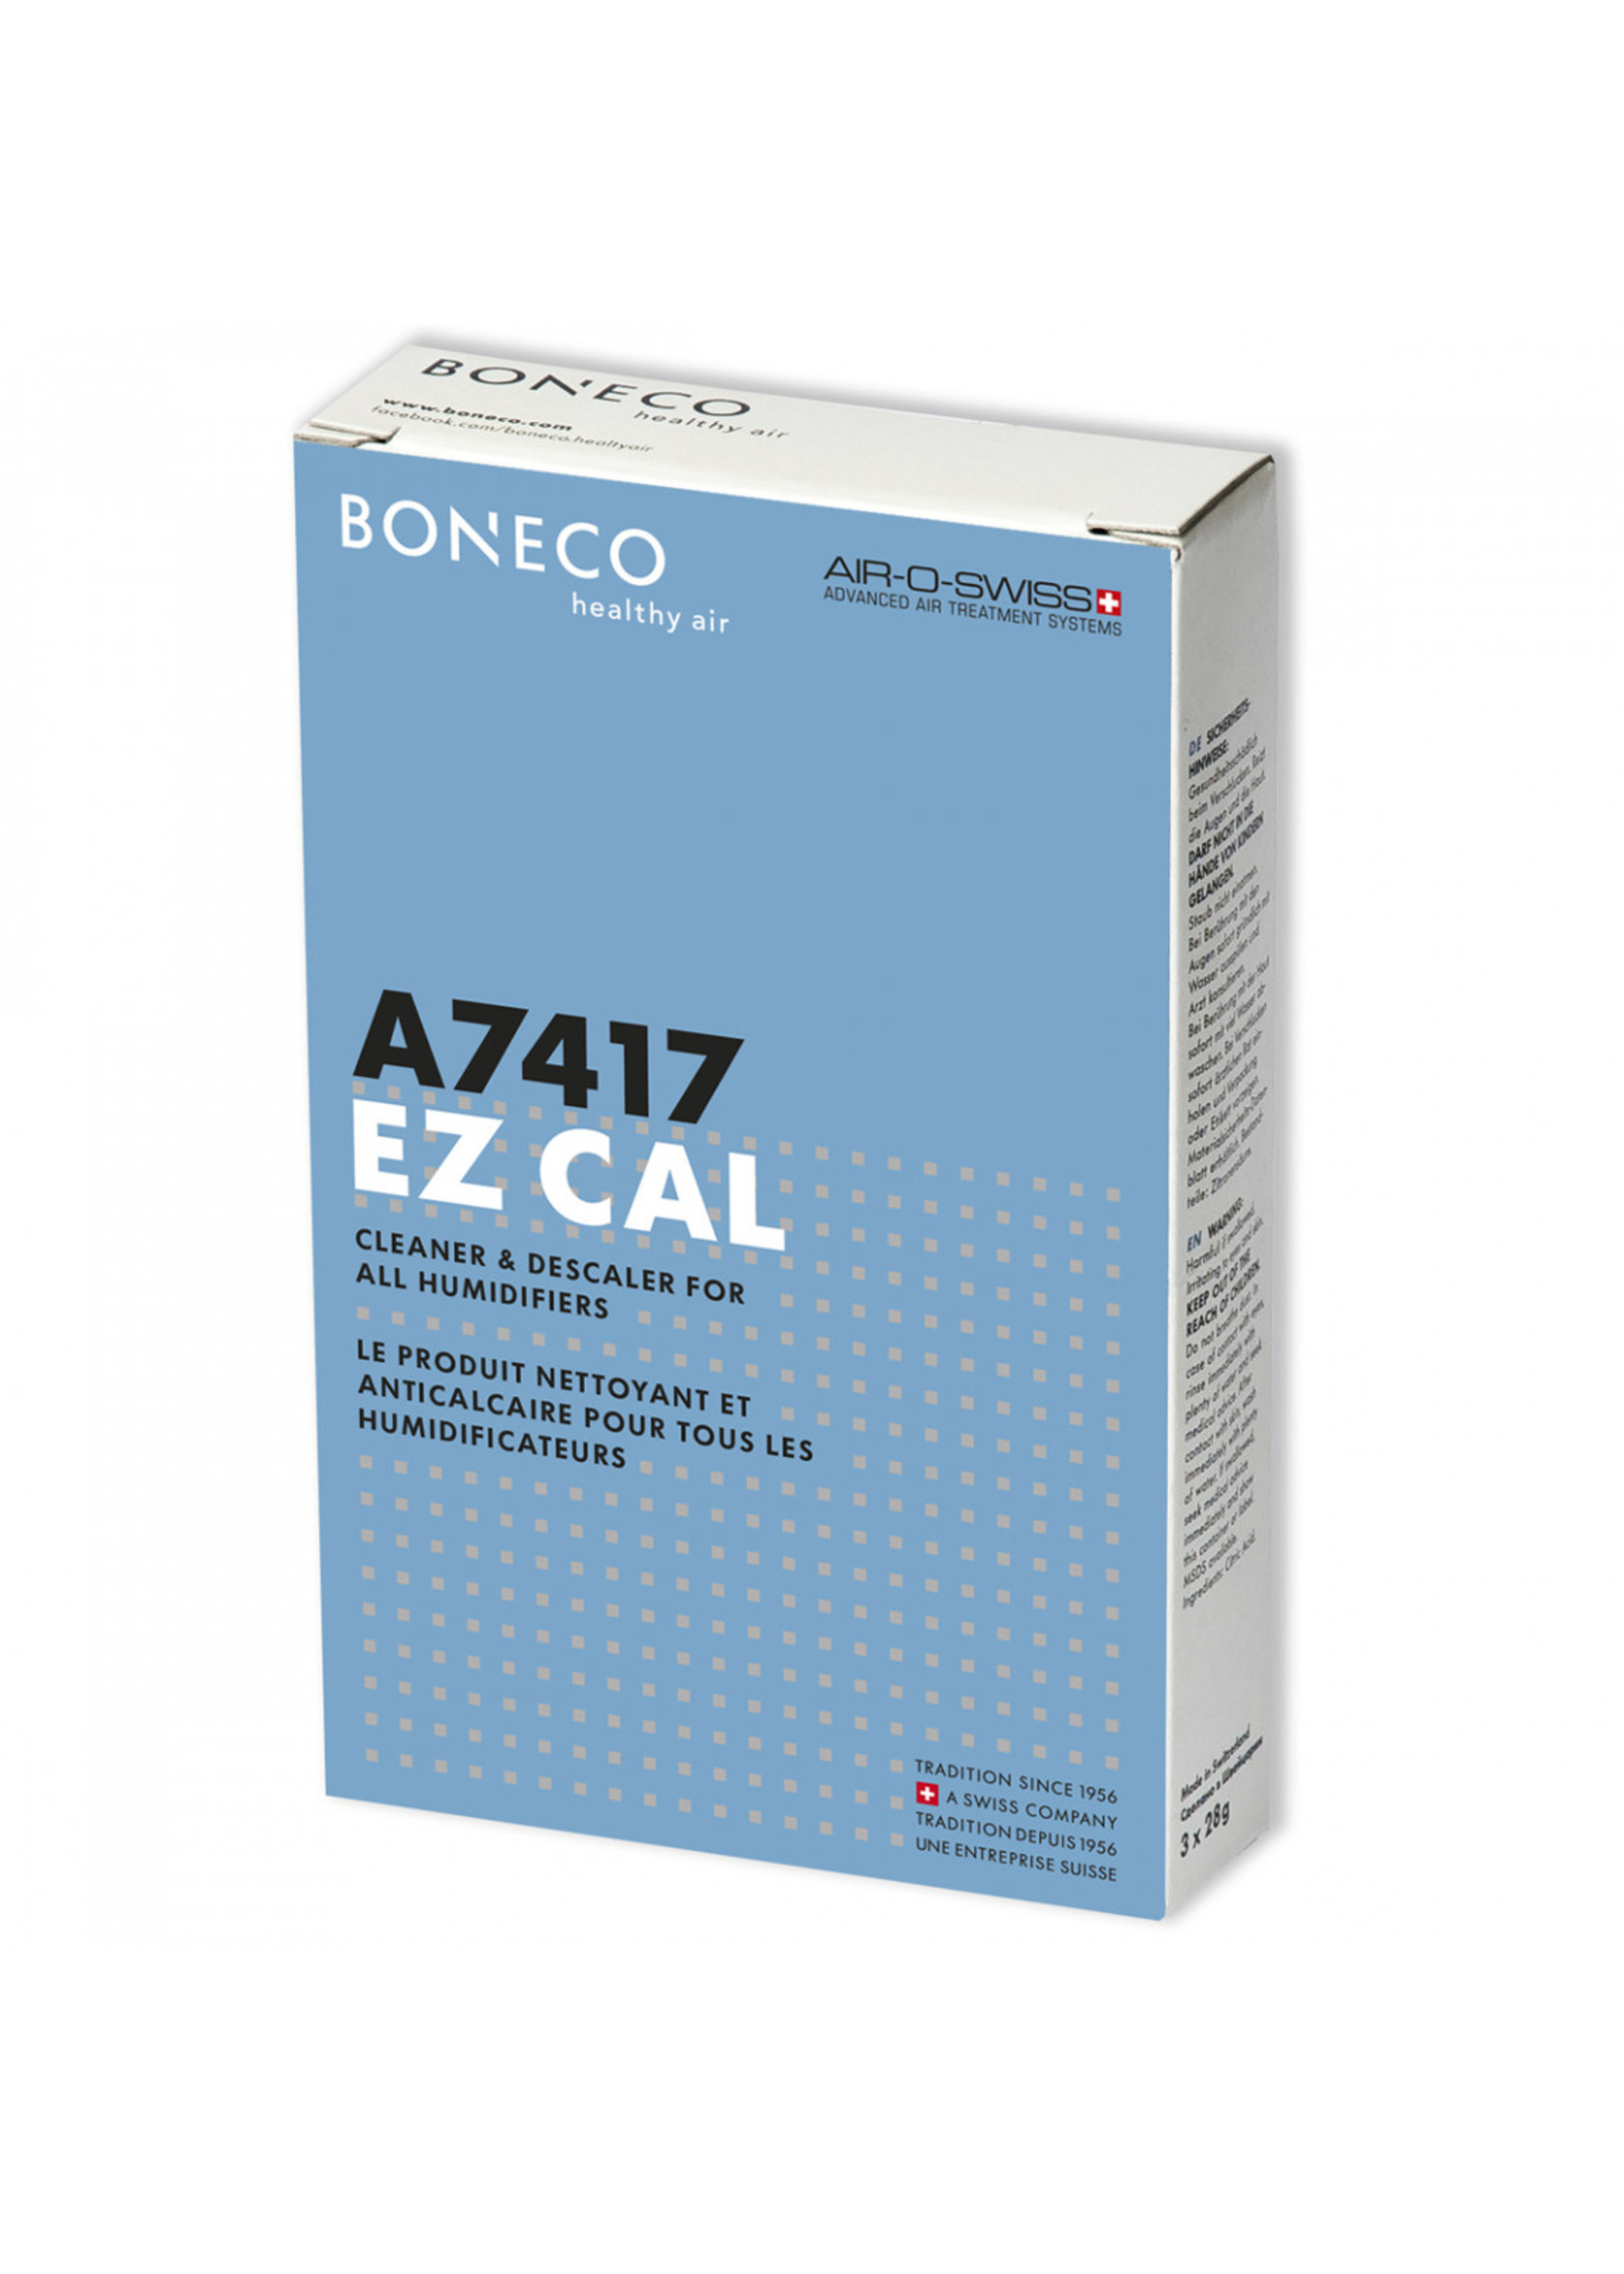 BONECO 33063- BONECO/AOS NETTOYANT EZCAL  A7417(3) HUMID